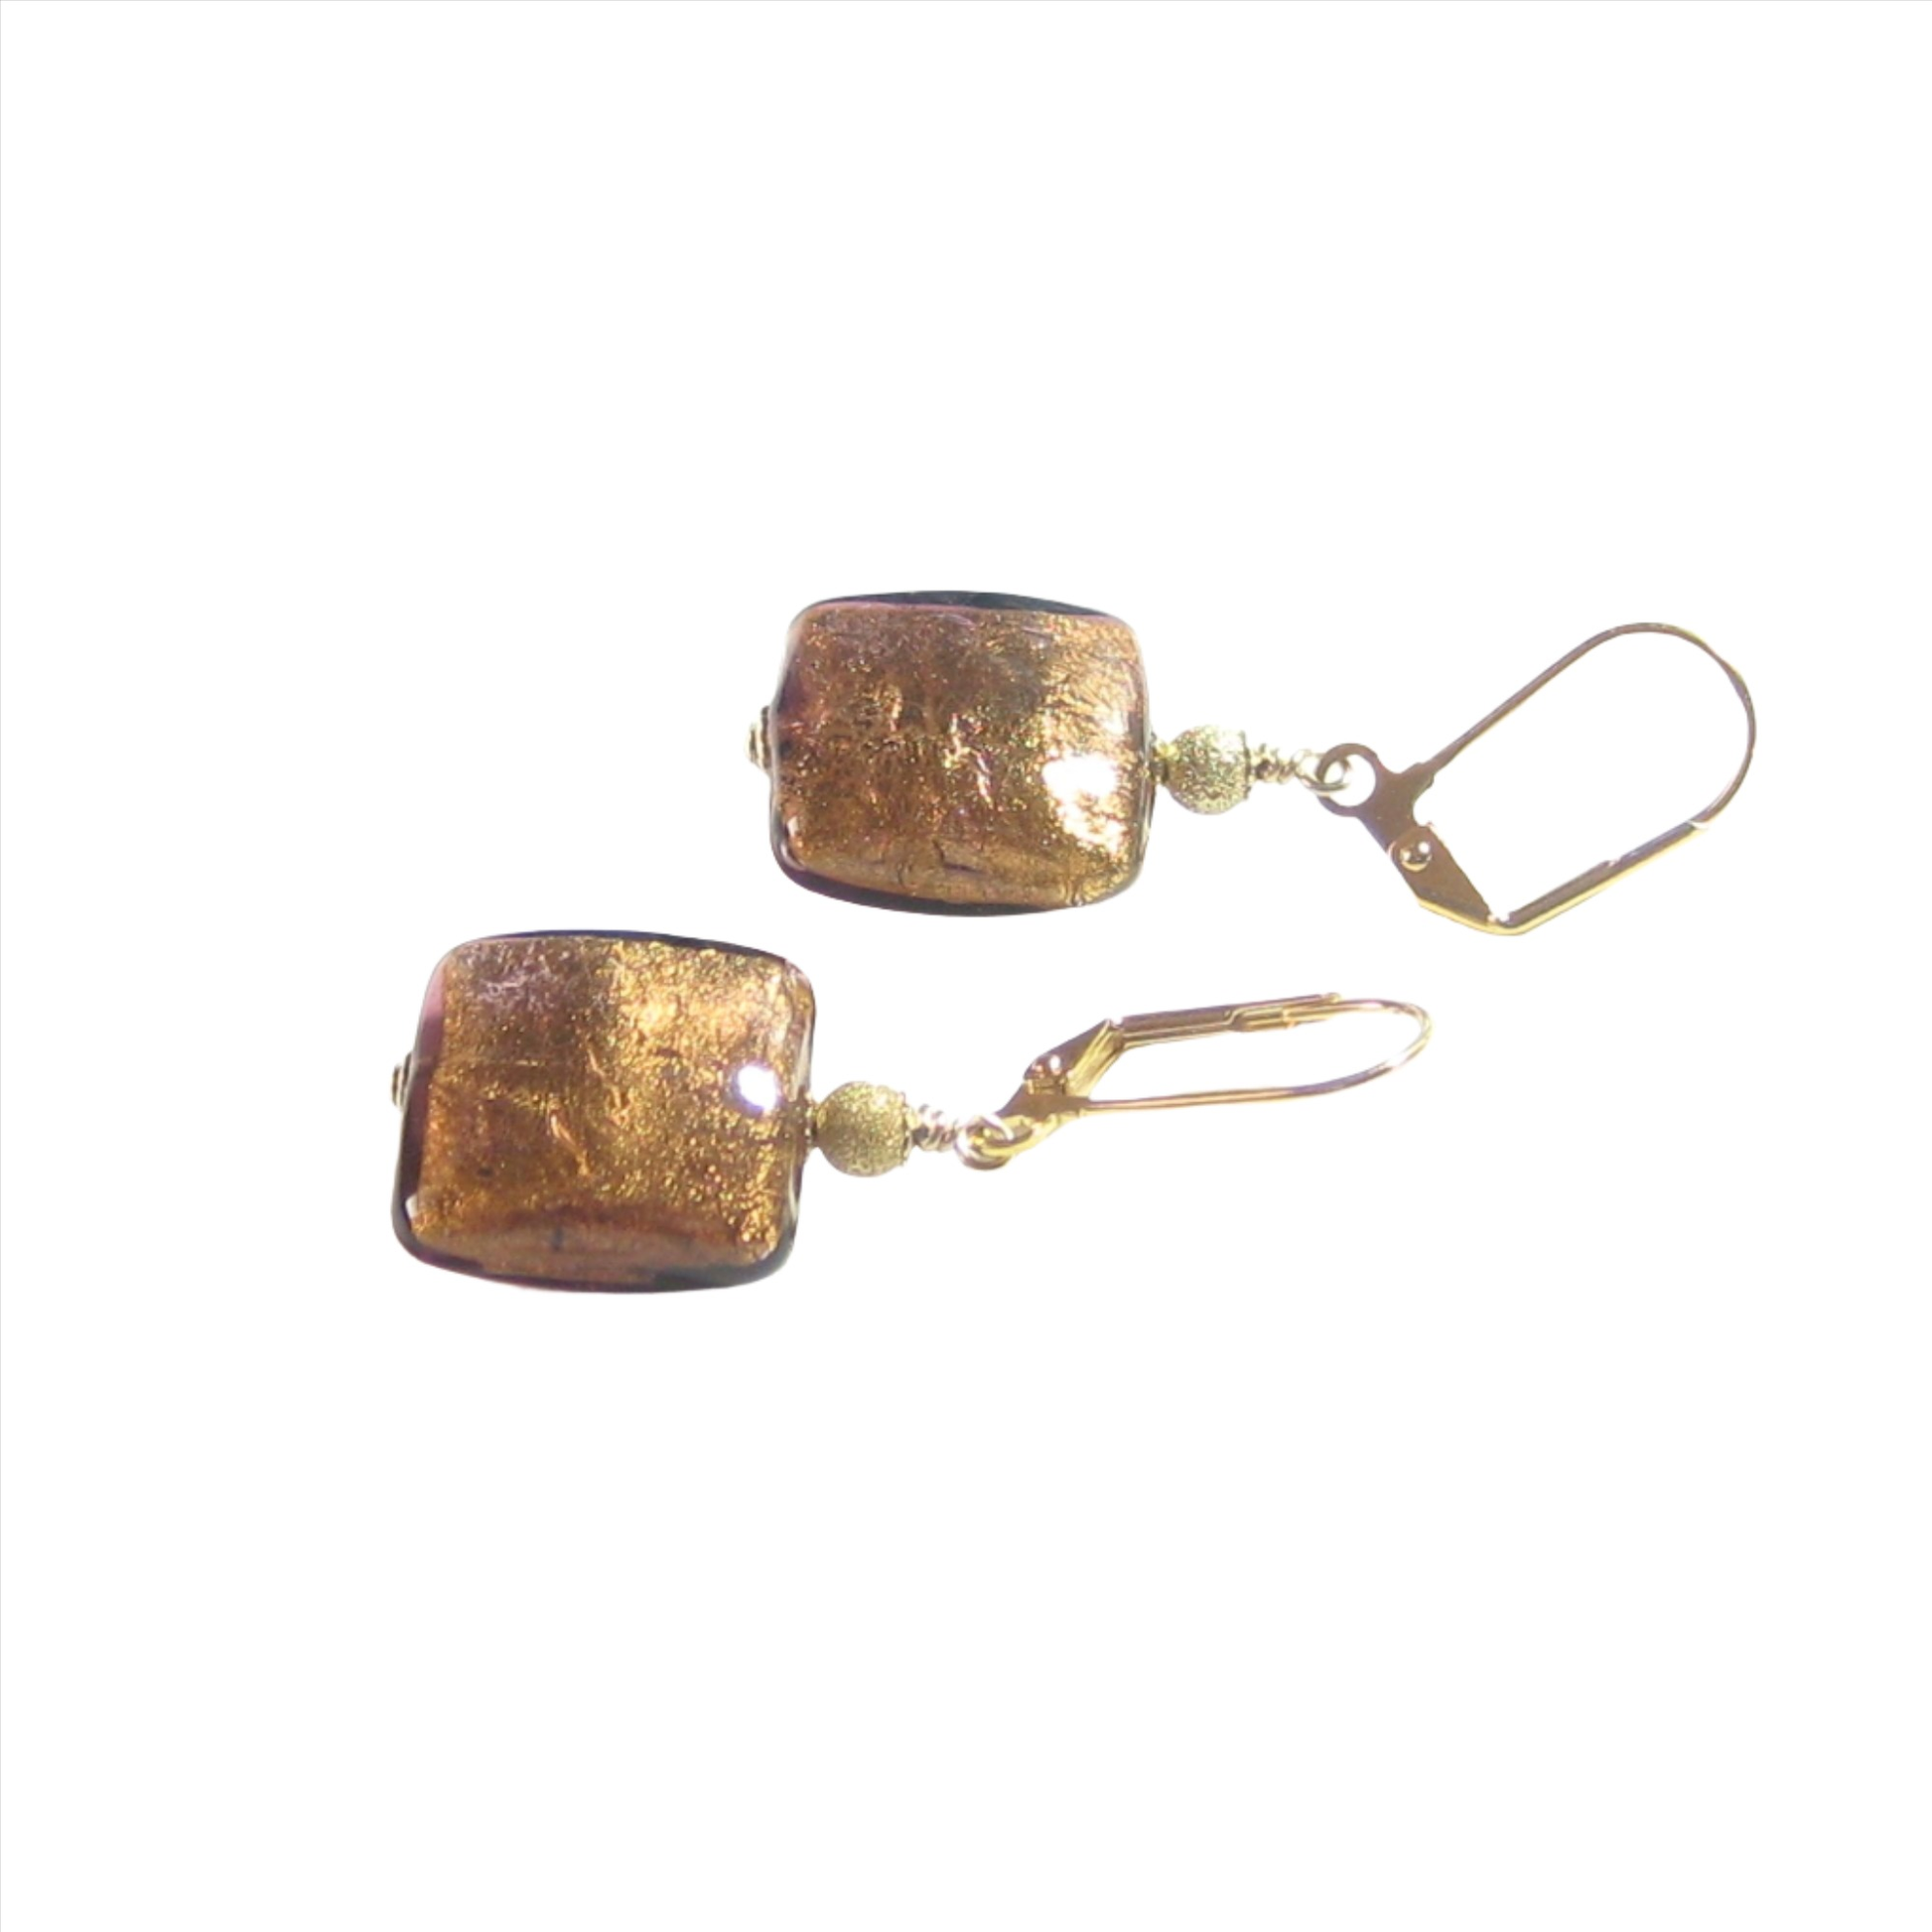 Murano Glass Brown Square Gold Earrings - JKC Murano